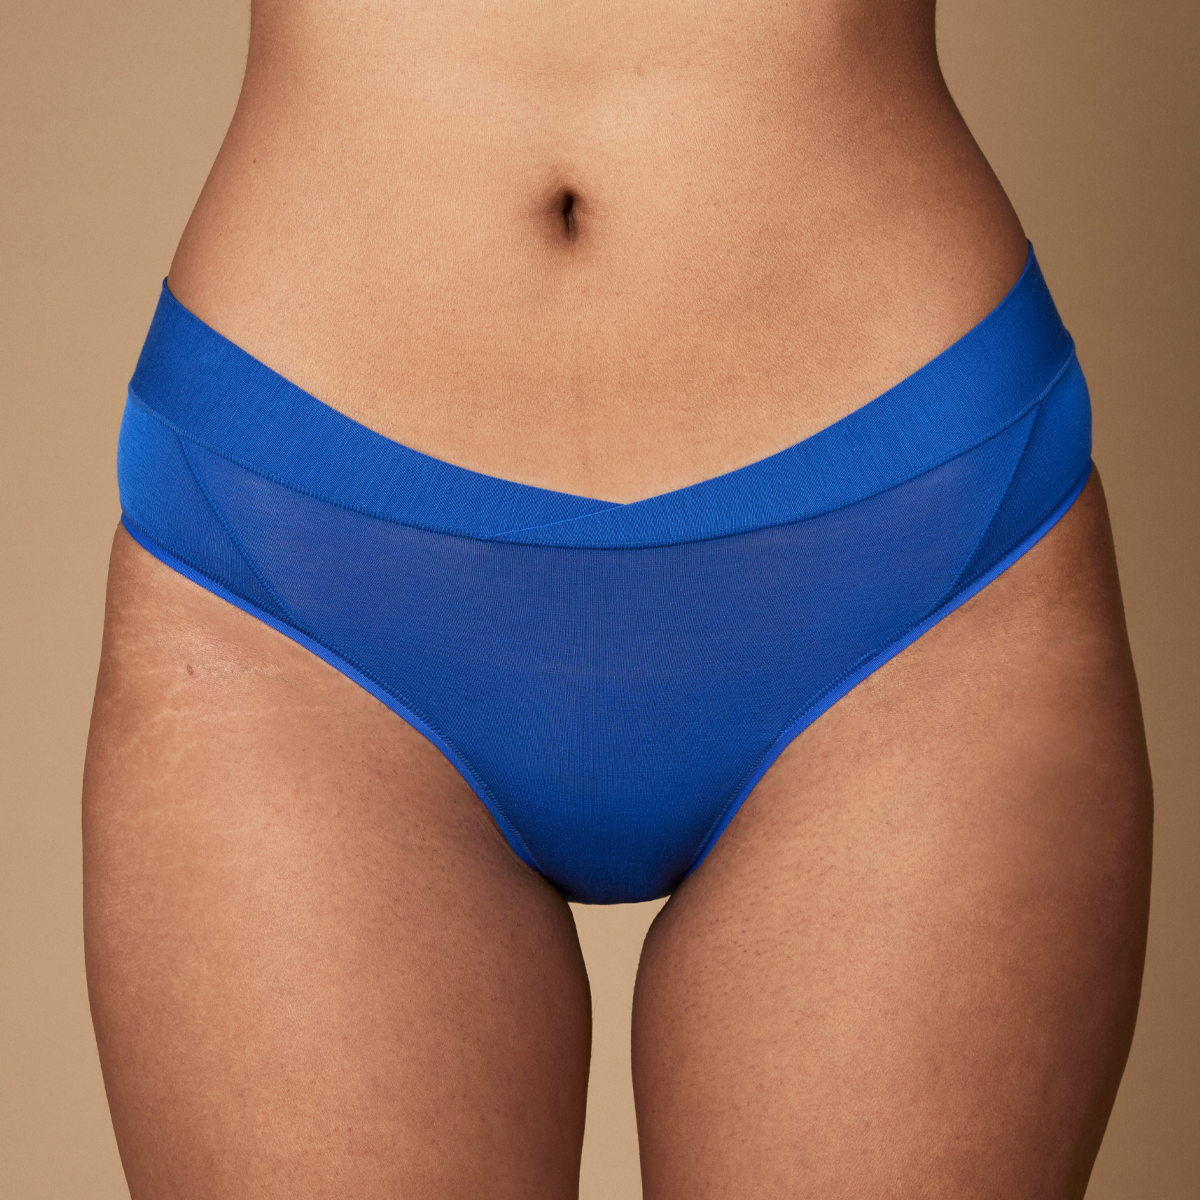 UNDERDAYS Lingerie Launches Bold Blue Underwear